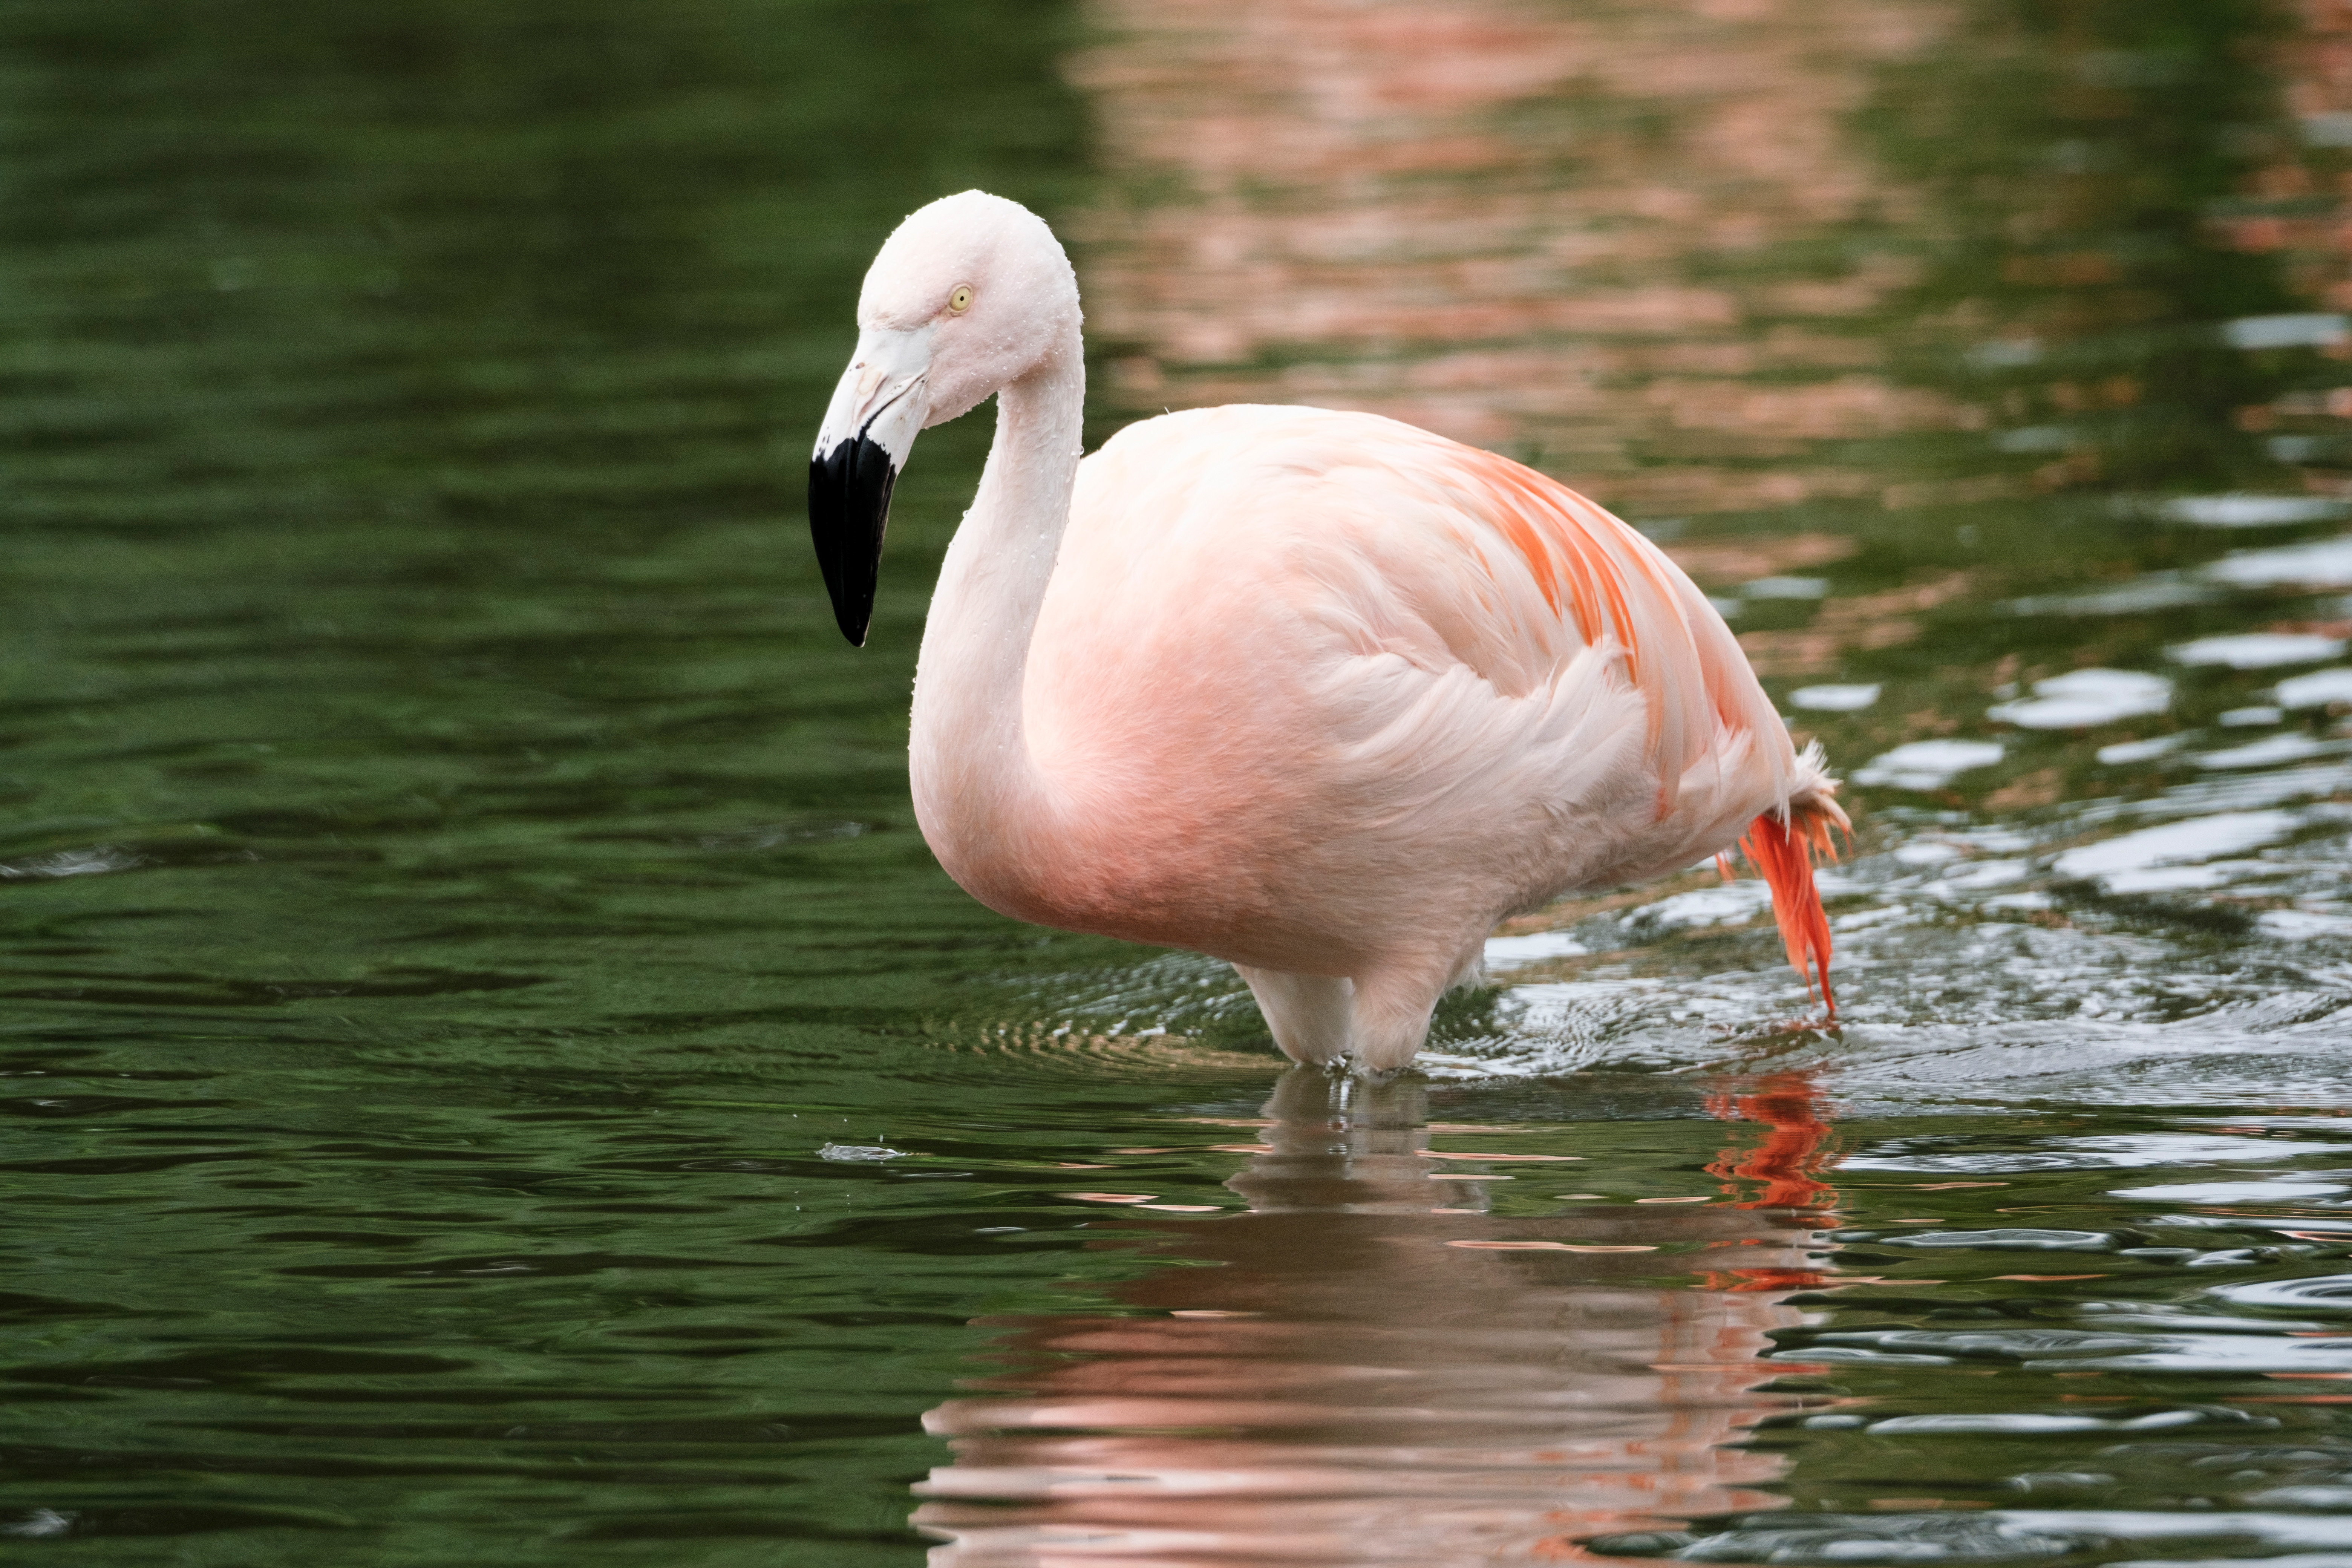 Flamingo, photo (C) Angela Nicholson, X-H2S, 1/800s, f/7.1, ISO1000, 436mm (653mm equivalent)